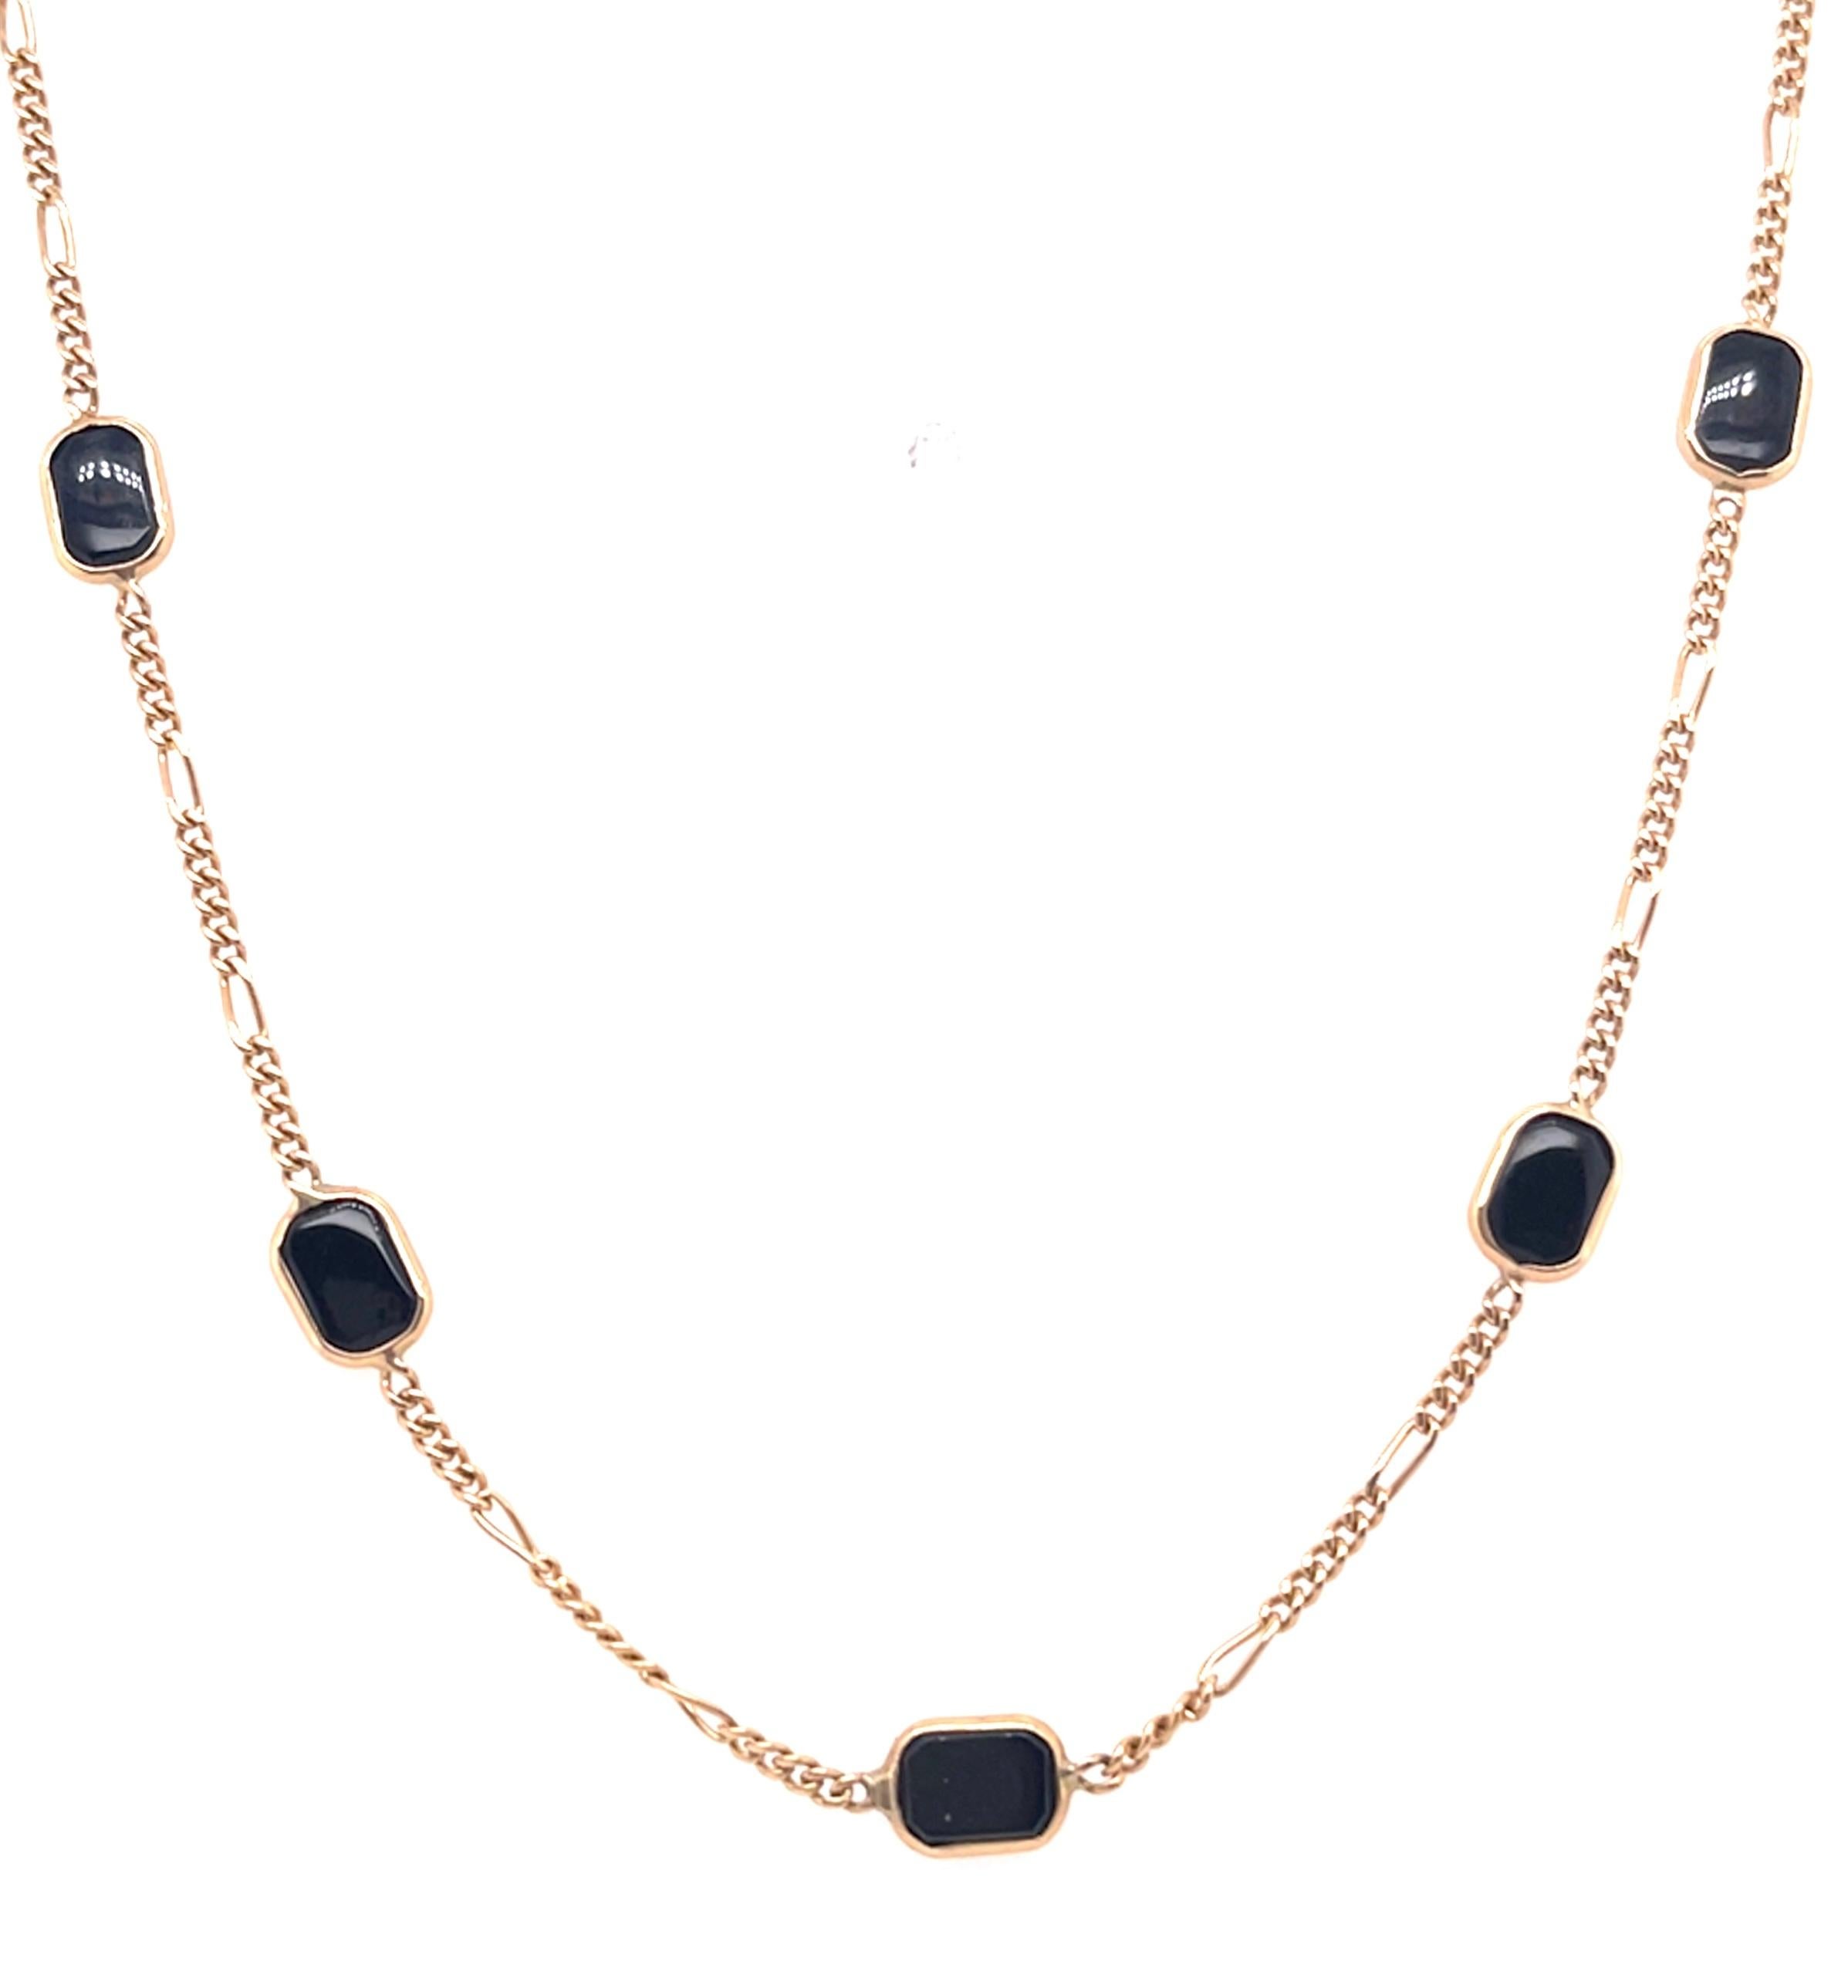 14 Karat Yellow Gold 18 Inch Black Onyx Figaro Necklace
8 piece Black Onyx.
6 mm width
5.41 grams total weight.